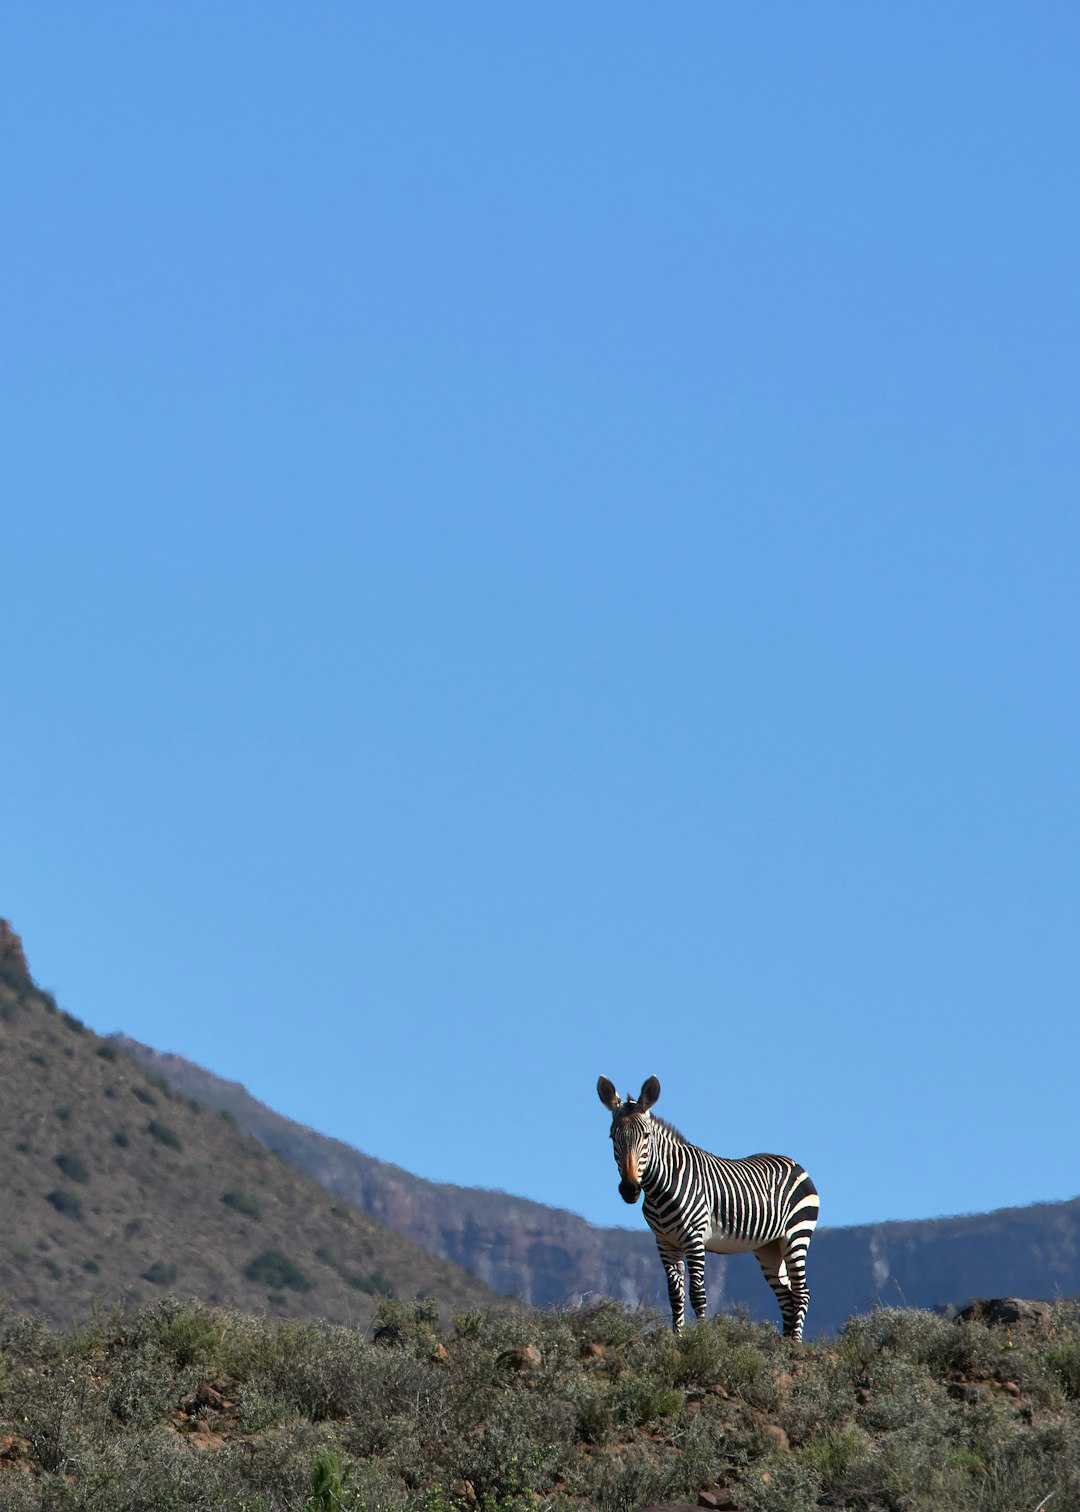 zebra standing on brown rock during daytime